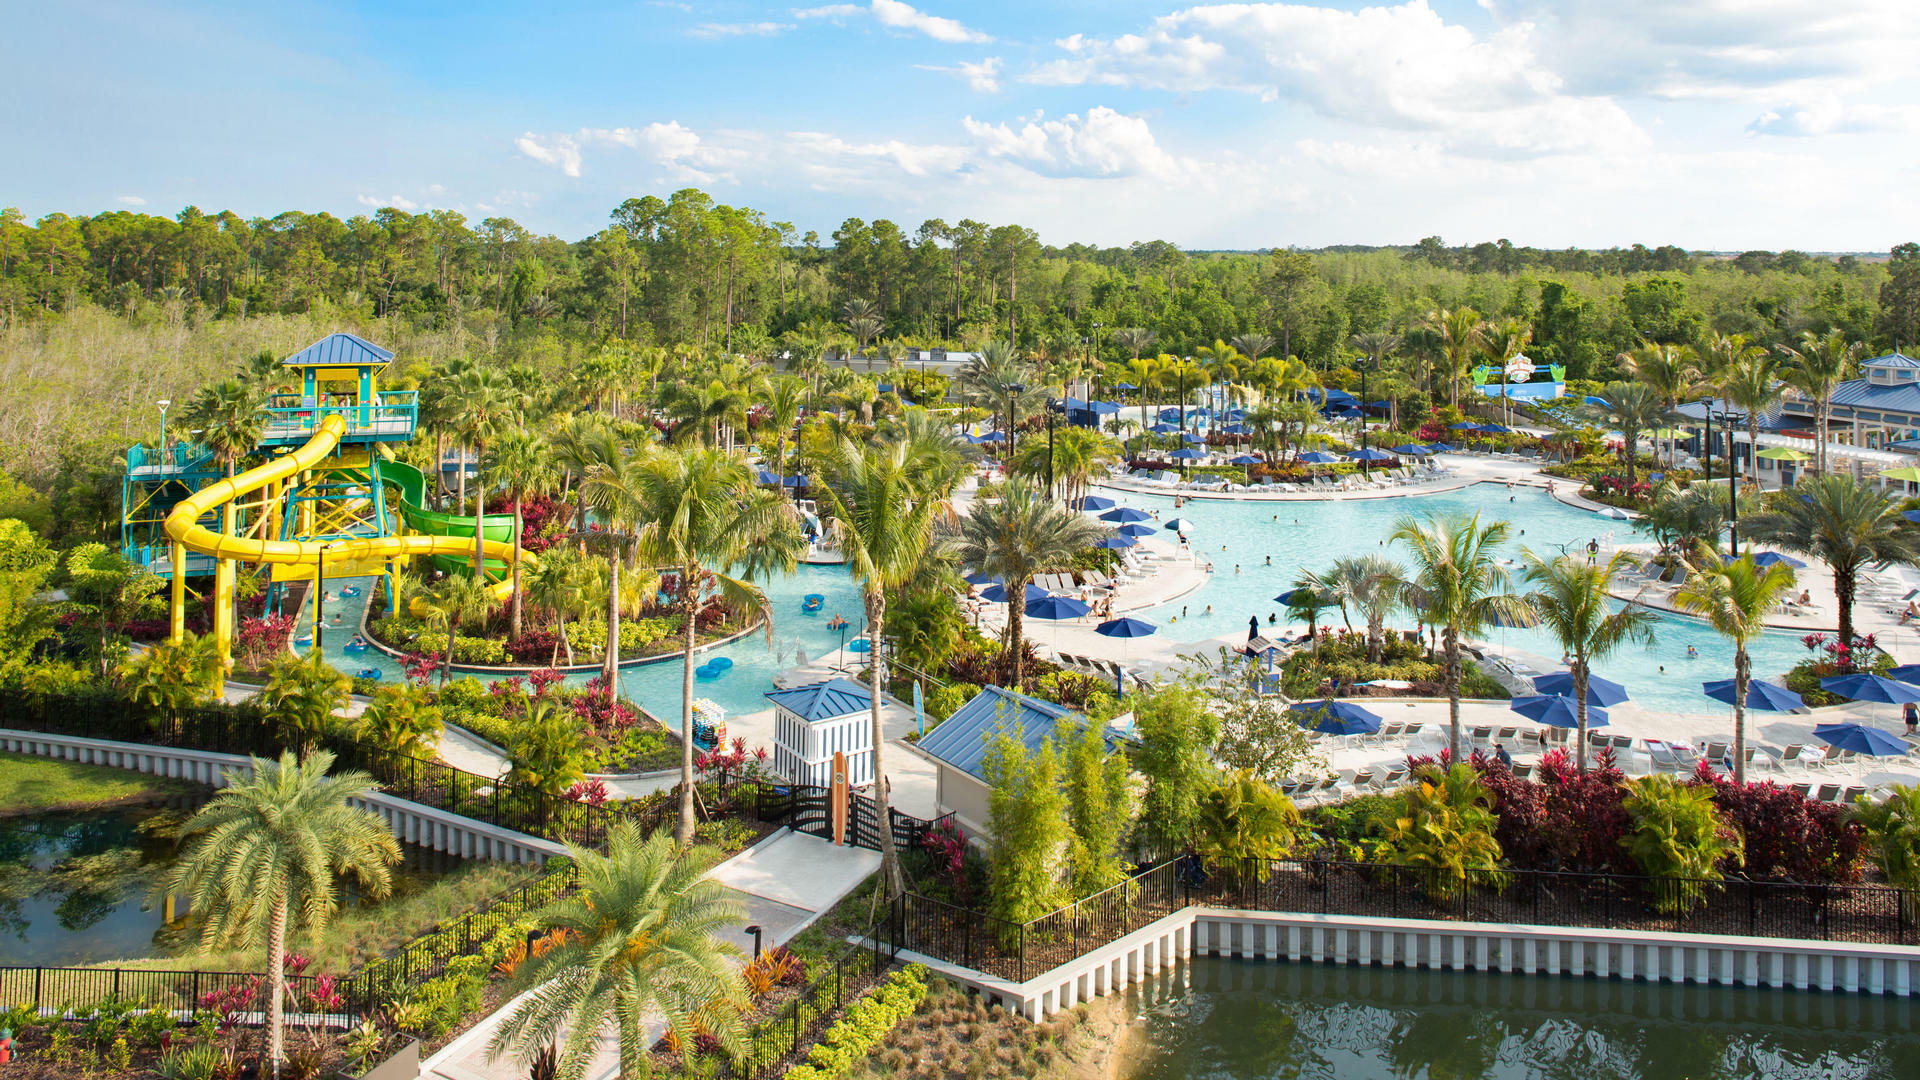 Photo of The Grove Resort & Water Park Orlando, Winter Garden, FL